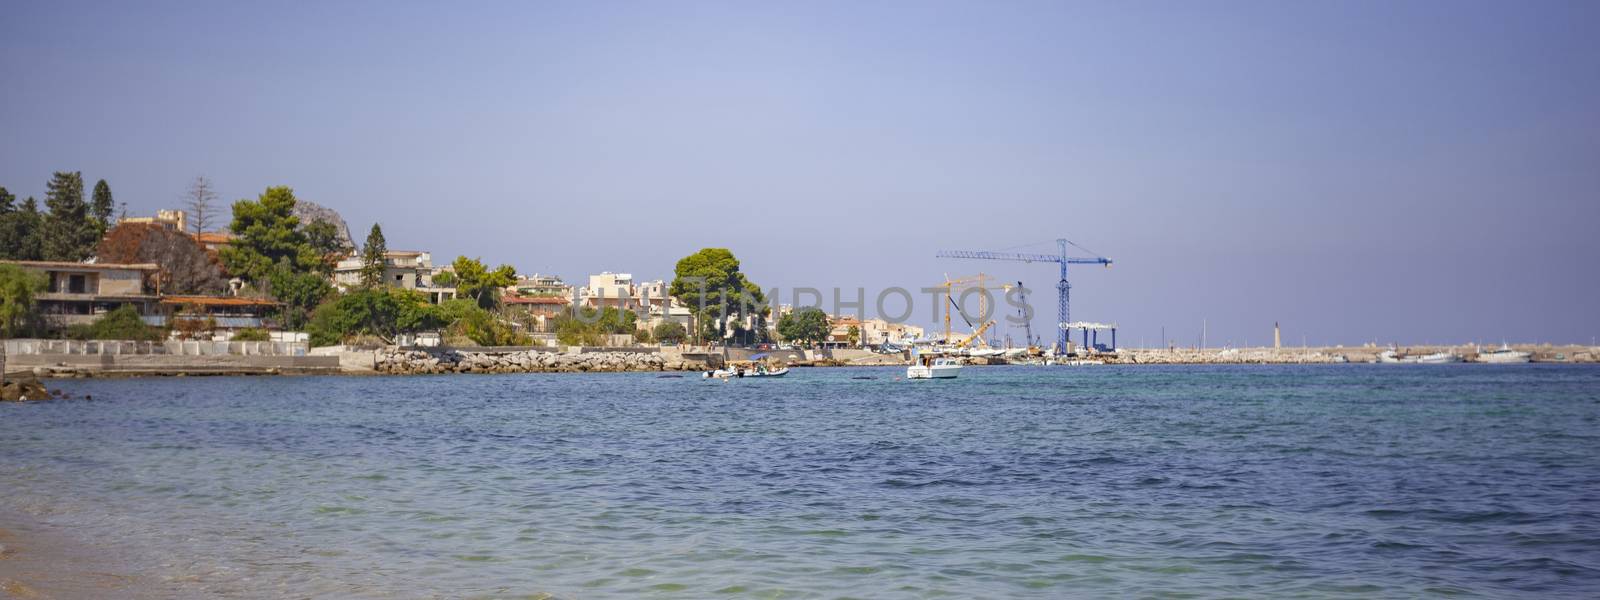 Porticello's Port on Sicily by pippocarlot